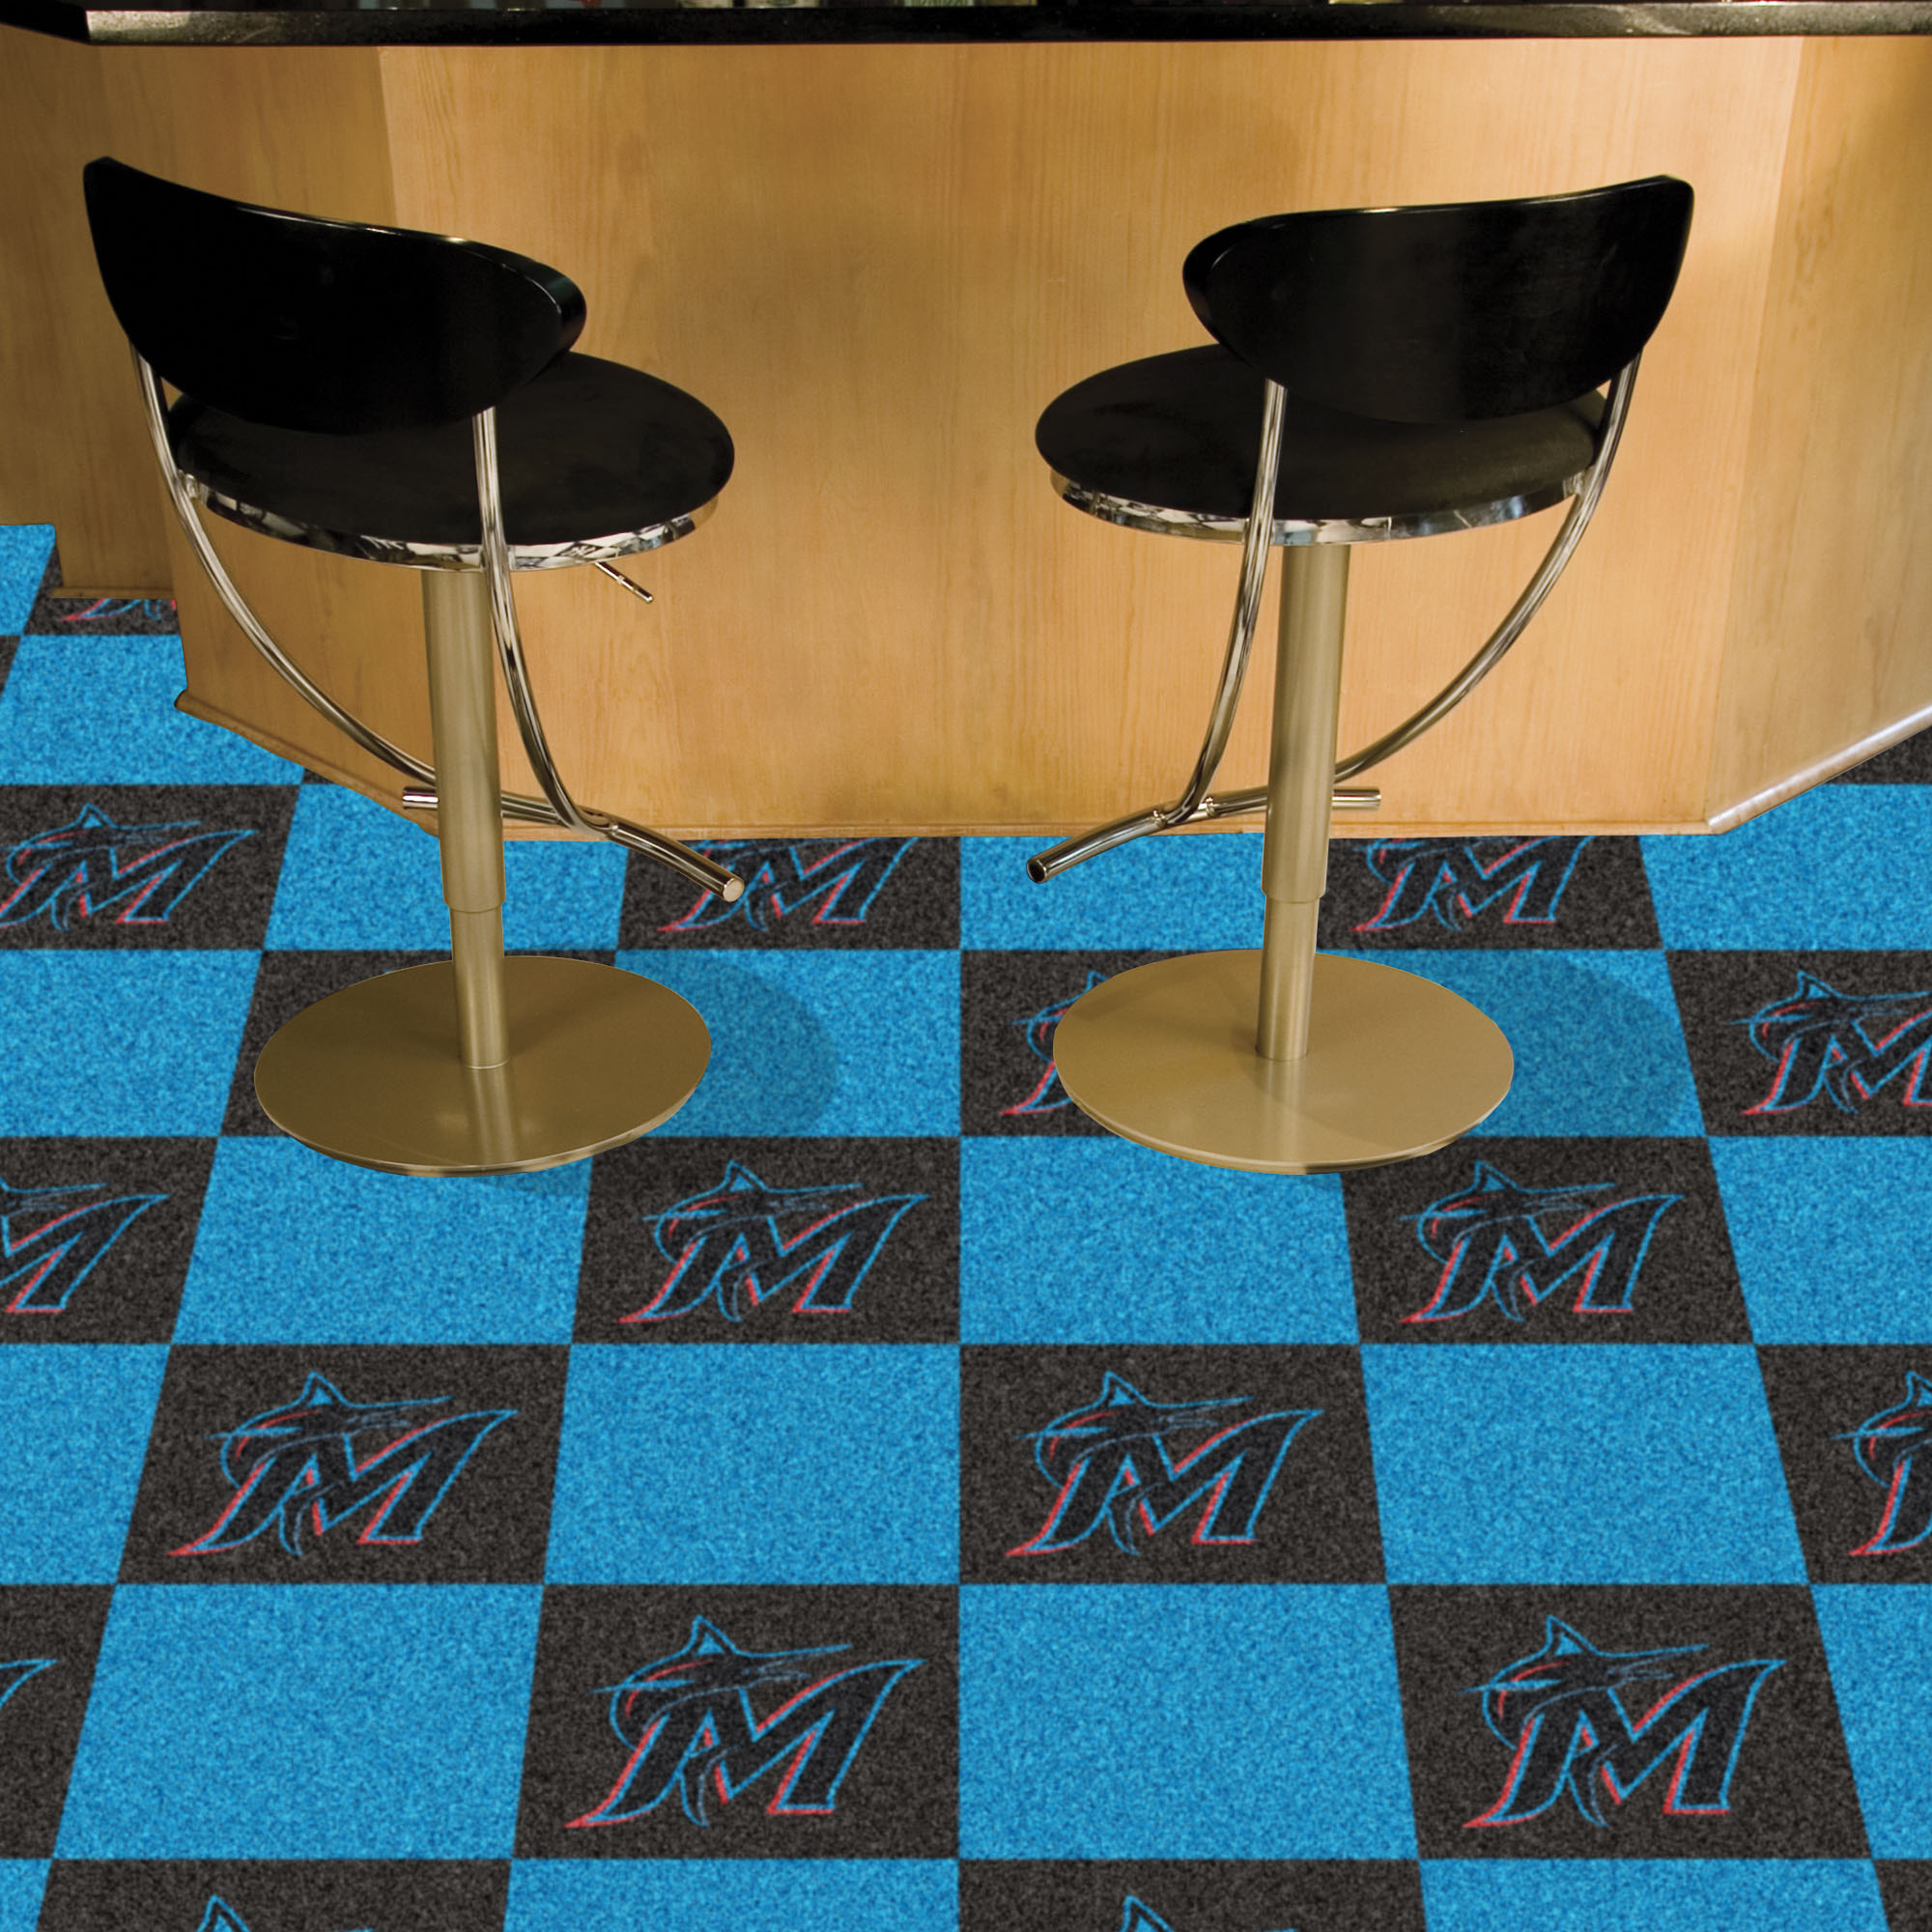 Miami Marlins Team Carpet Tiles - 45 sq ft